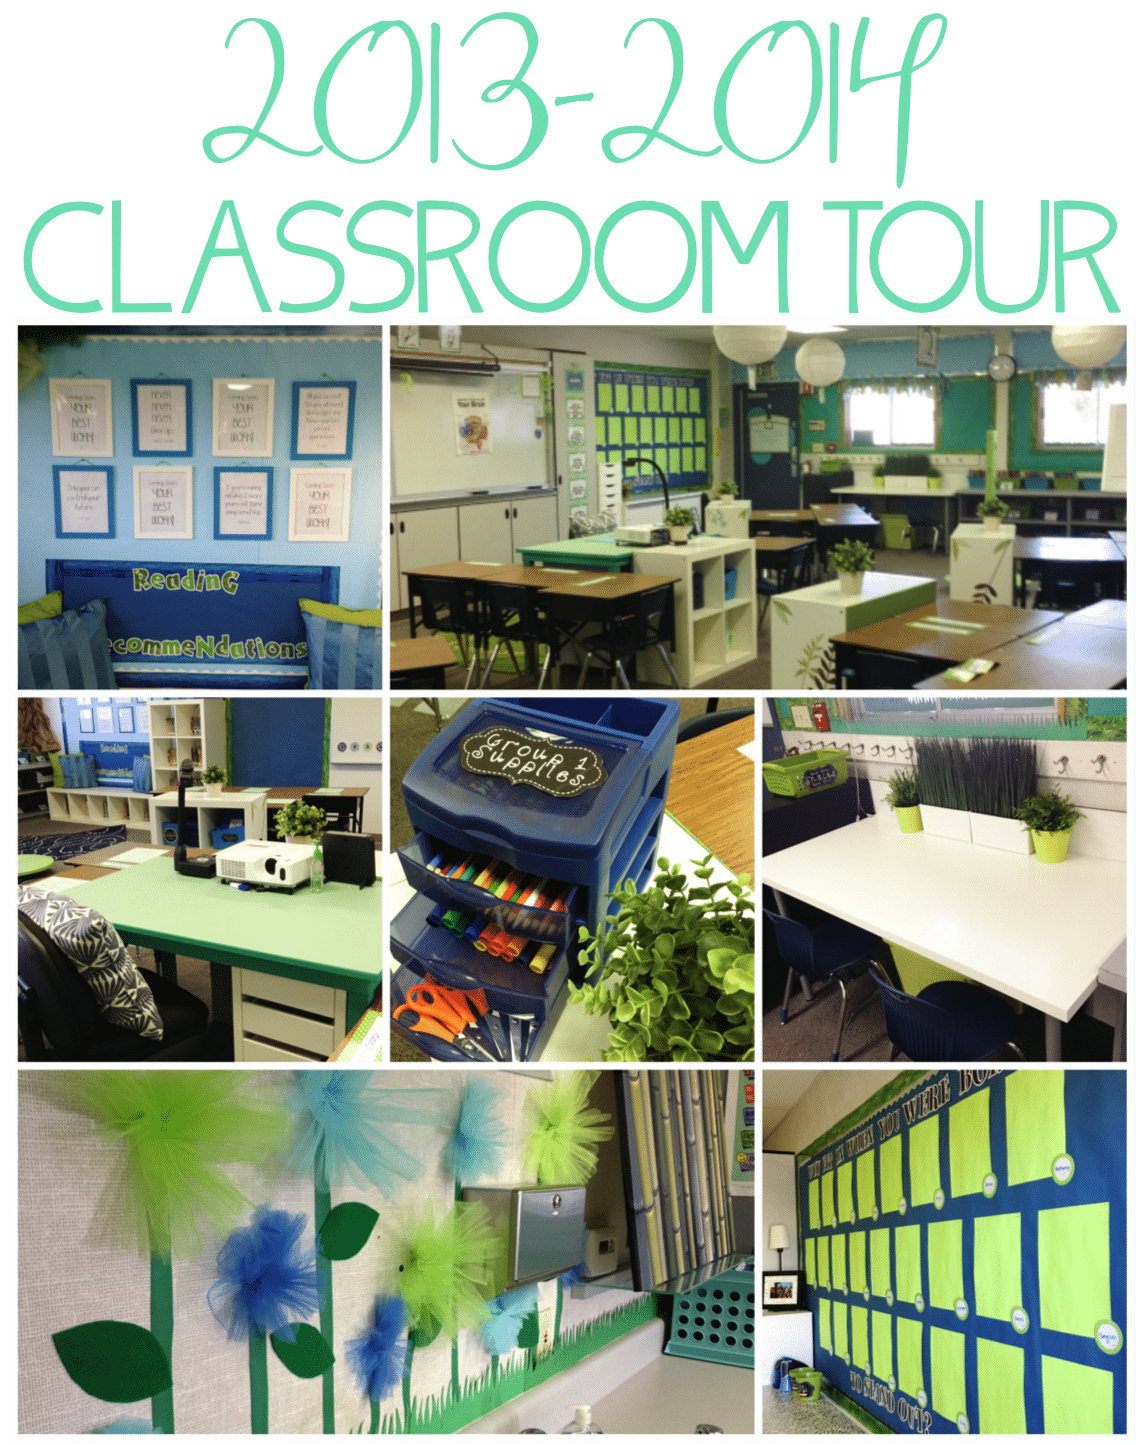 Core Isnpiration Classroom Tour 2013-14 Collage